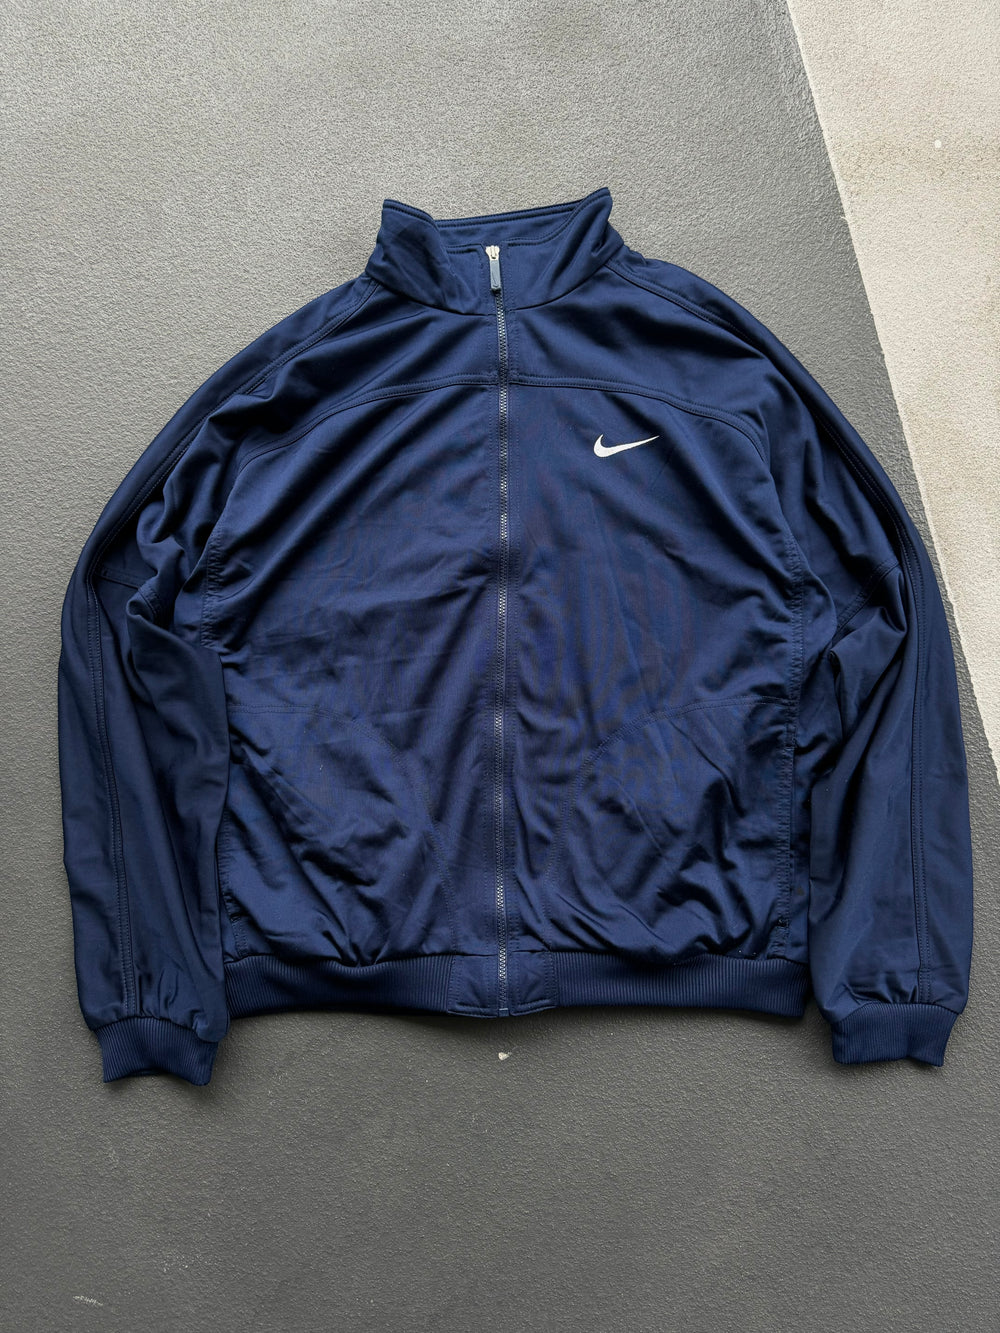 Vintage 90s Nike Swoosh Track Jacket (XL)